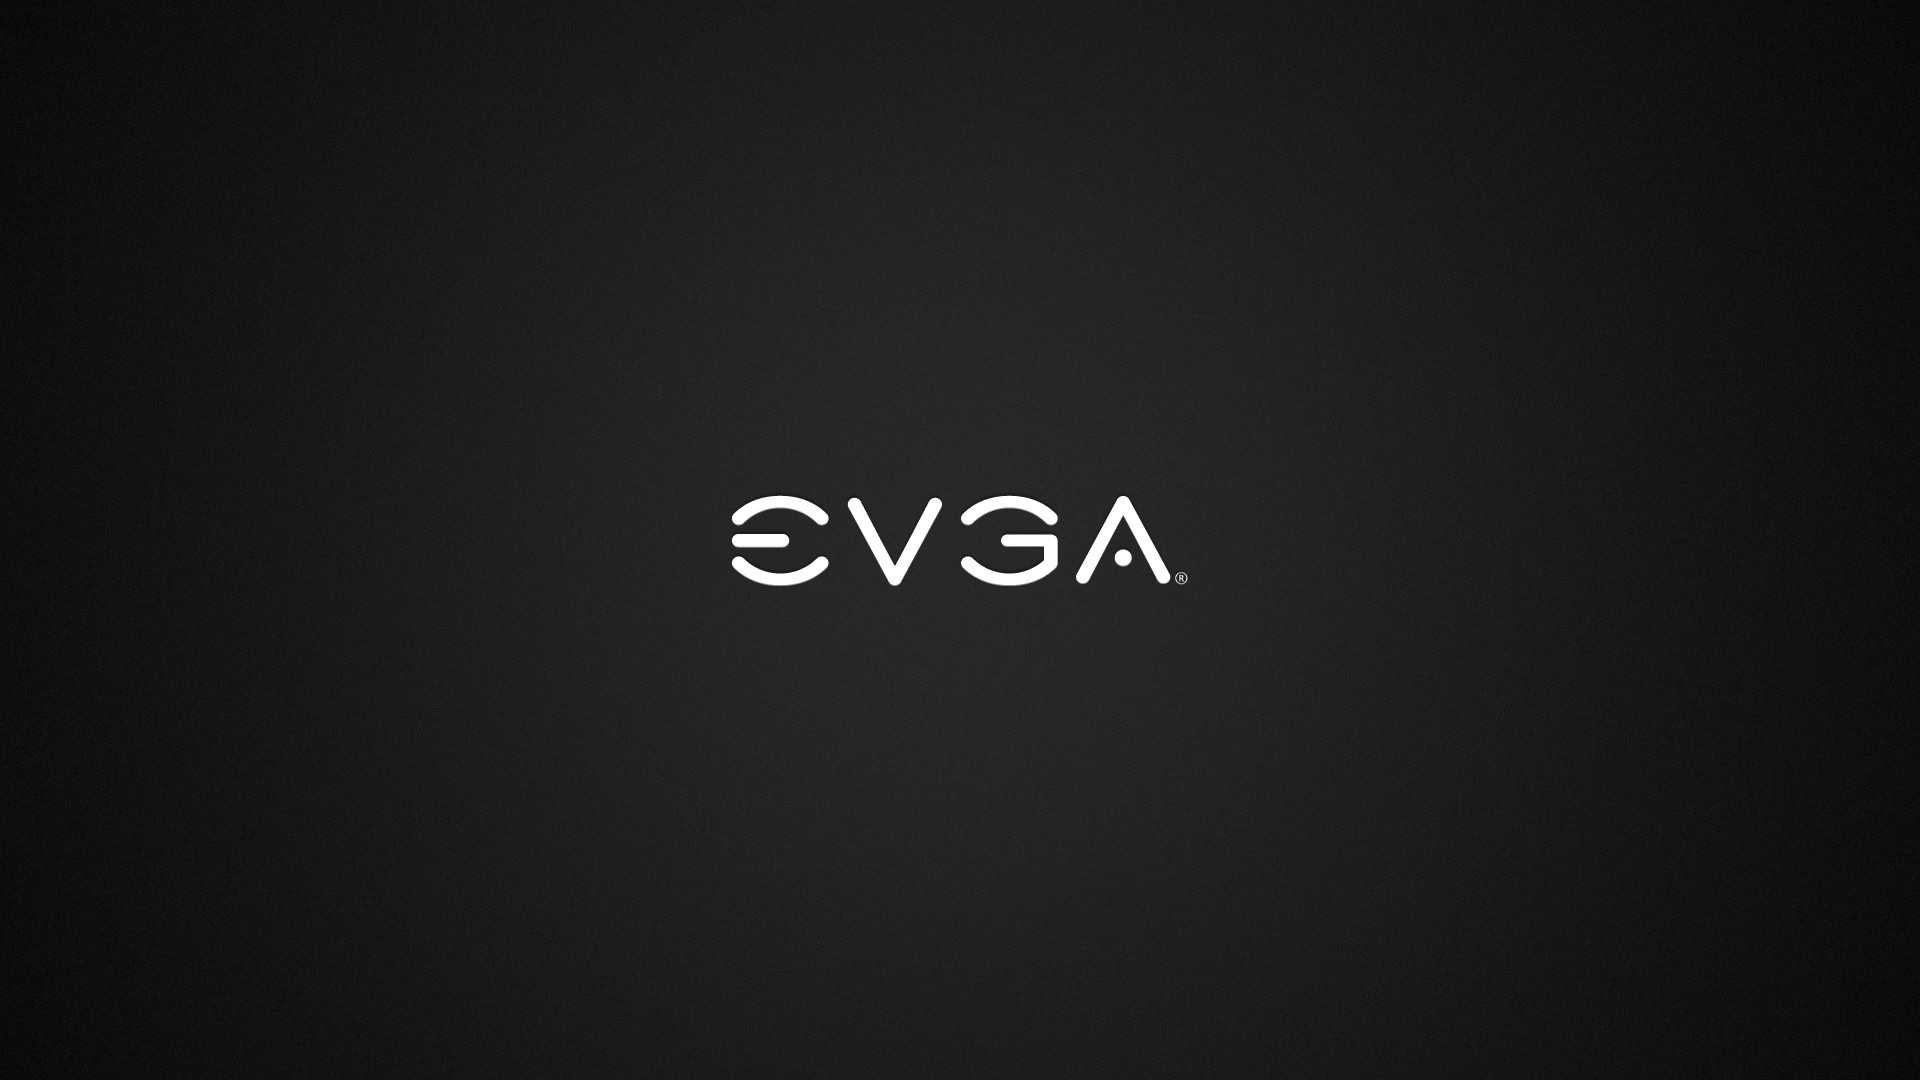 evga___dark_wallpaper_1080p_by_2ndlight-d4e38ei.jpg